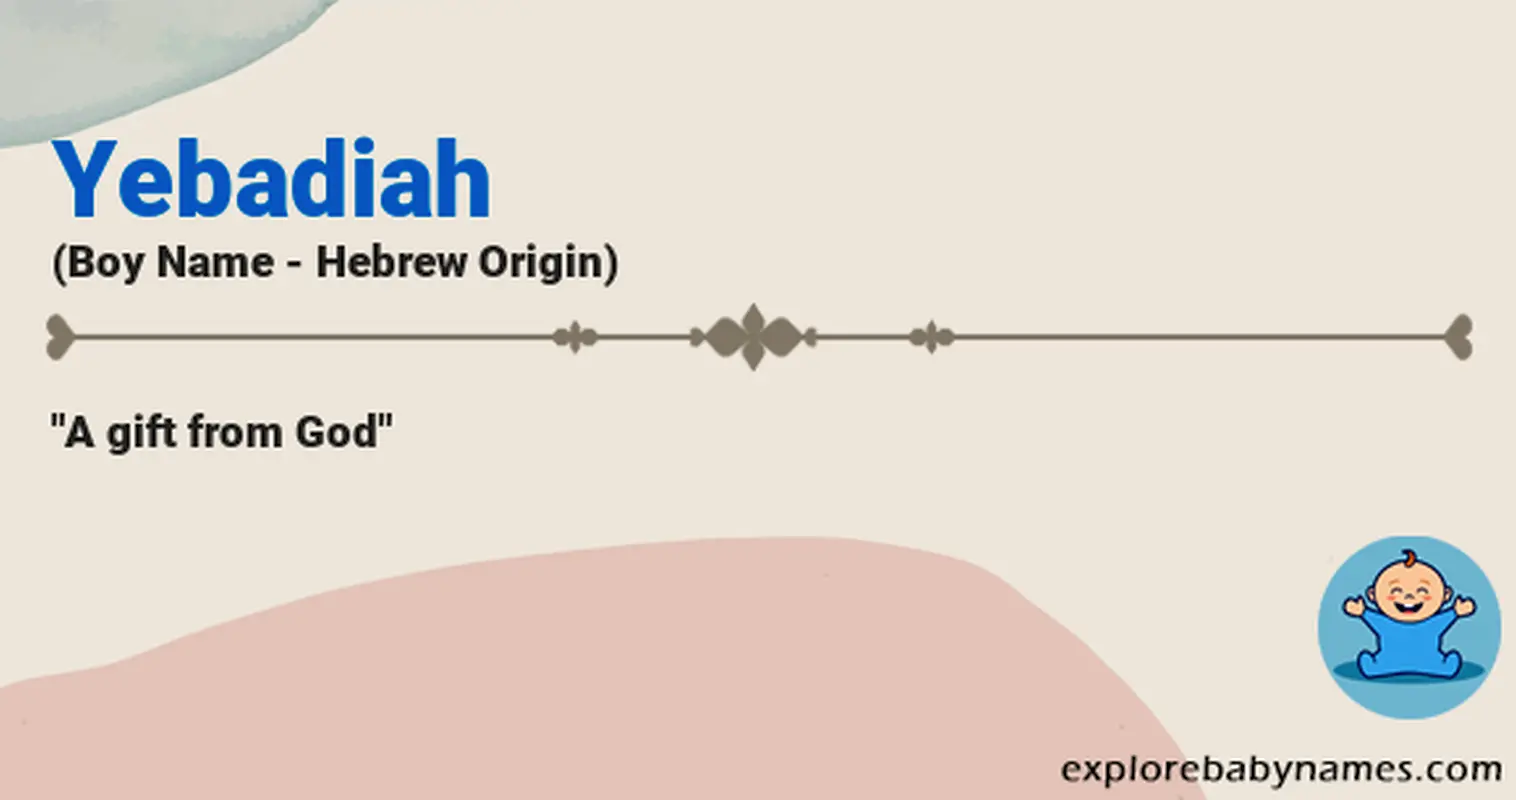 Meaning of Yebadiah